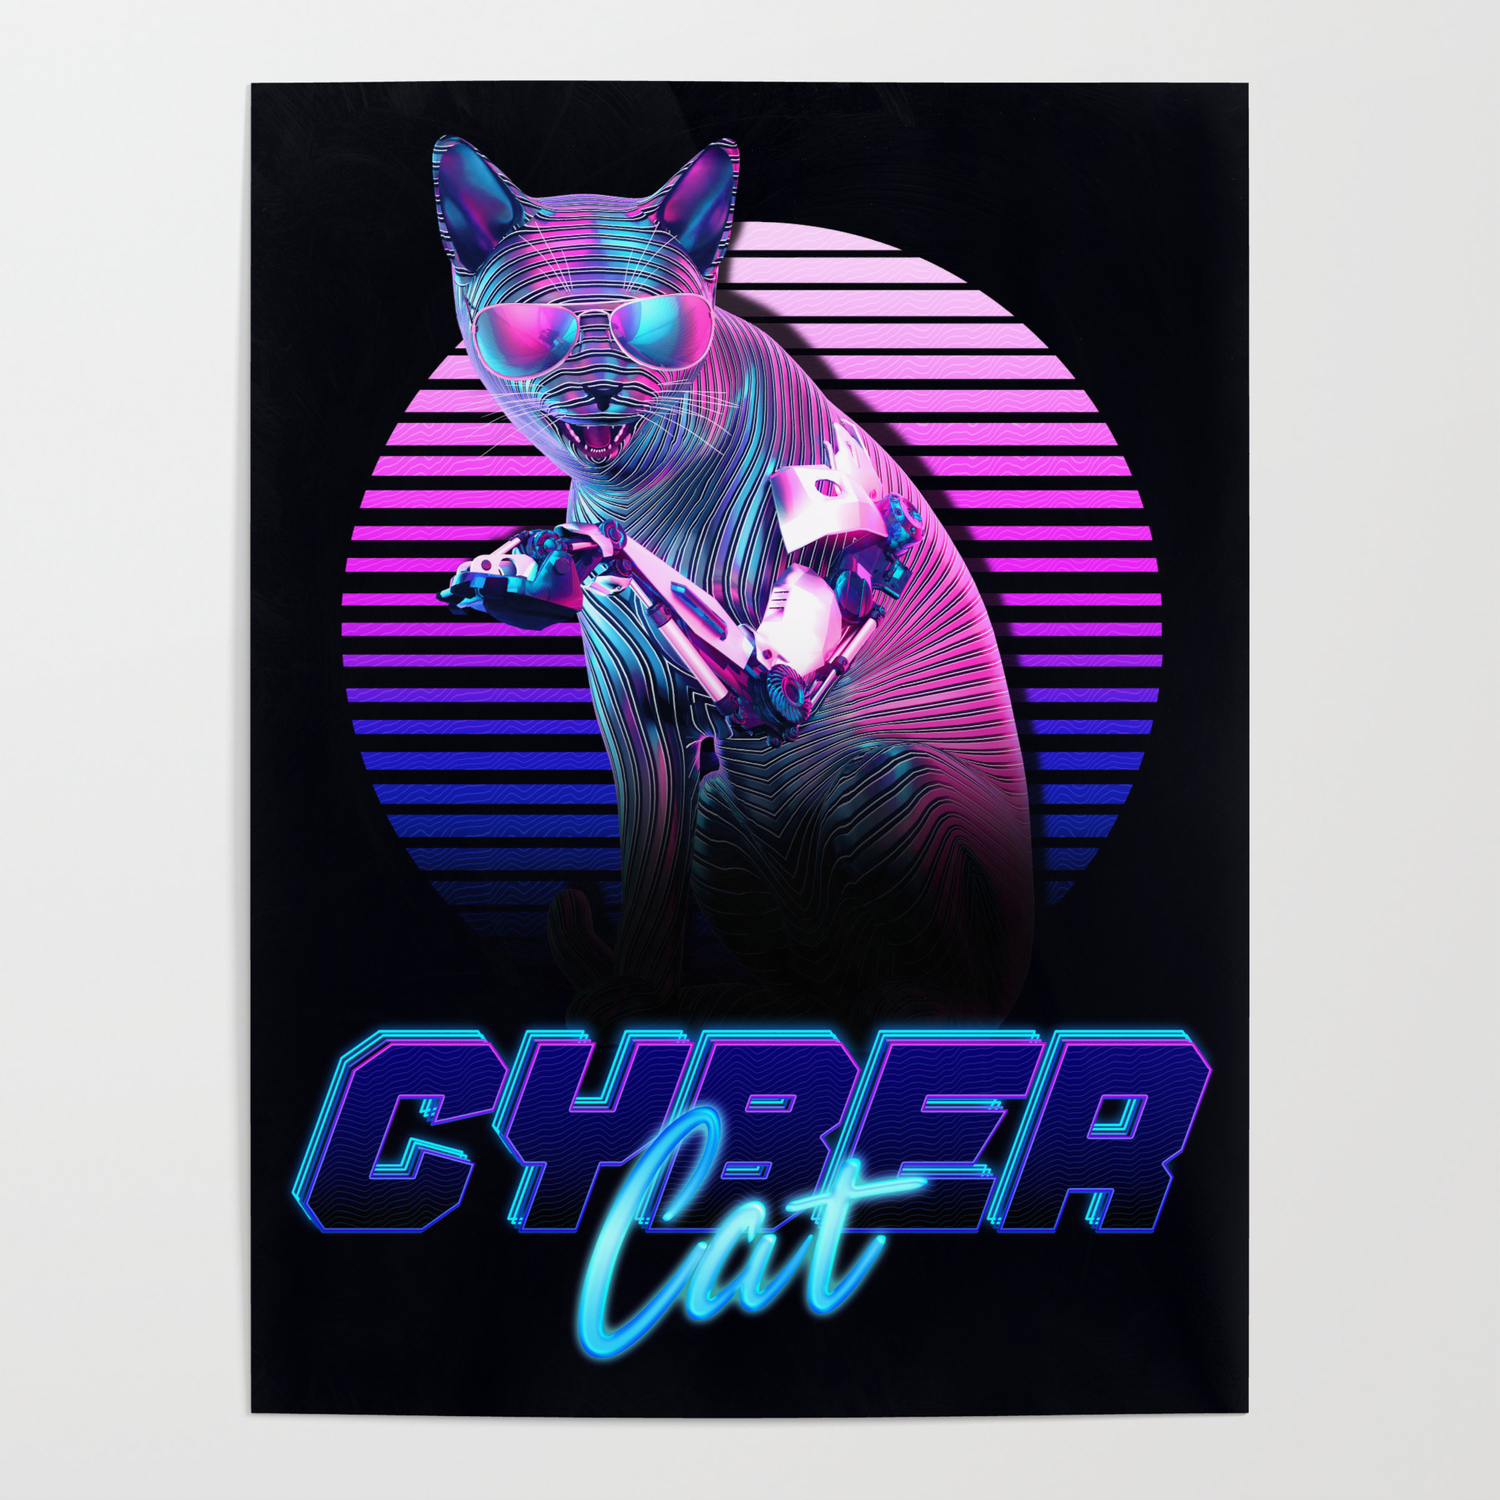 Cybercat Pet Cyborg cat cyberstyle 2077 Video game Poster by Ariela Alez |  Society6